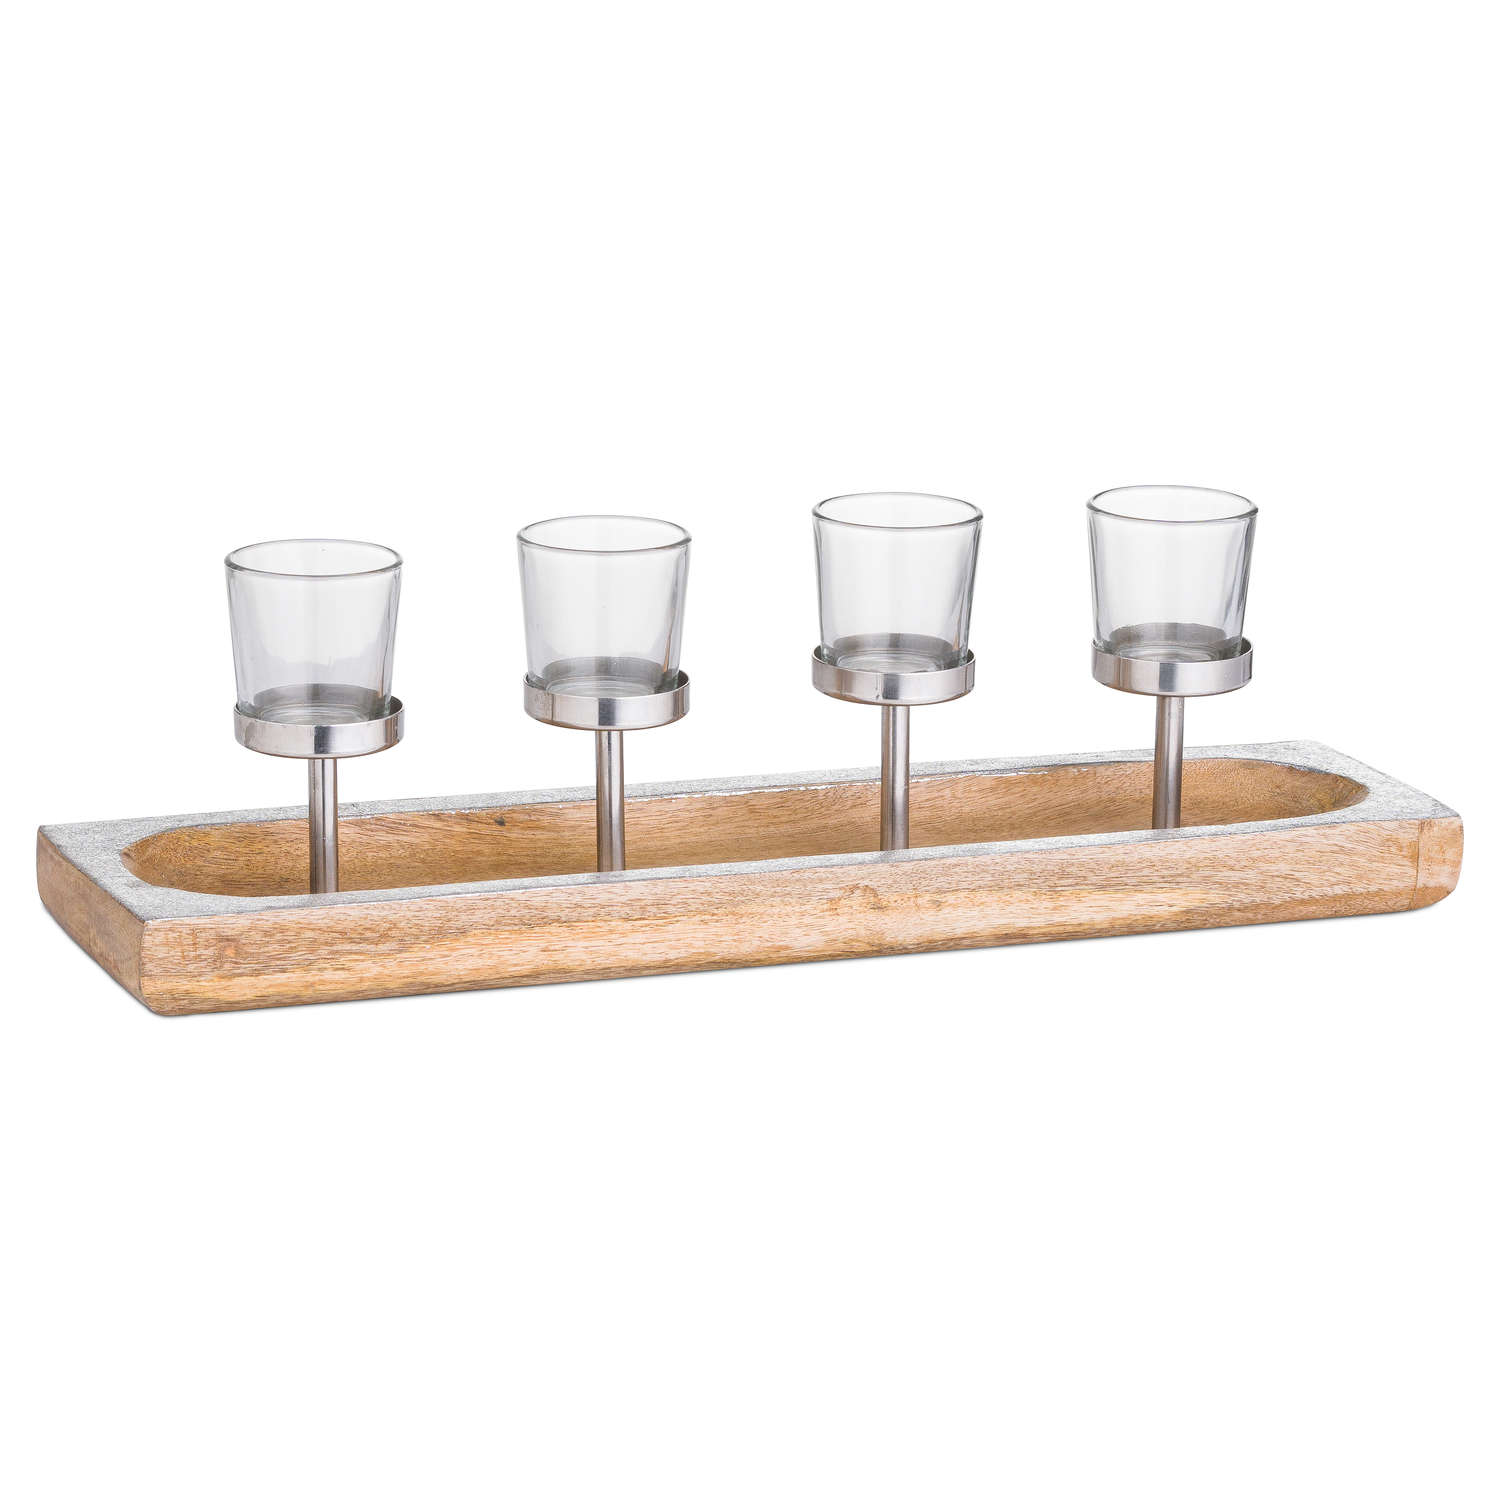 Hardwood Display Tray With Four Glass Tea Light Holders